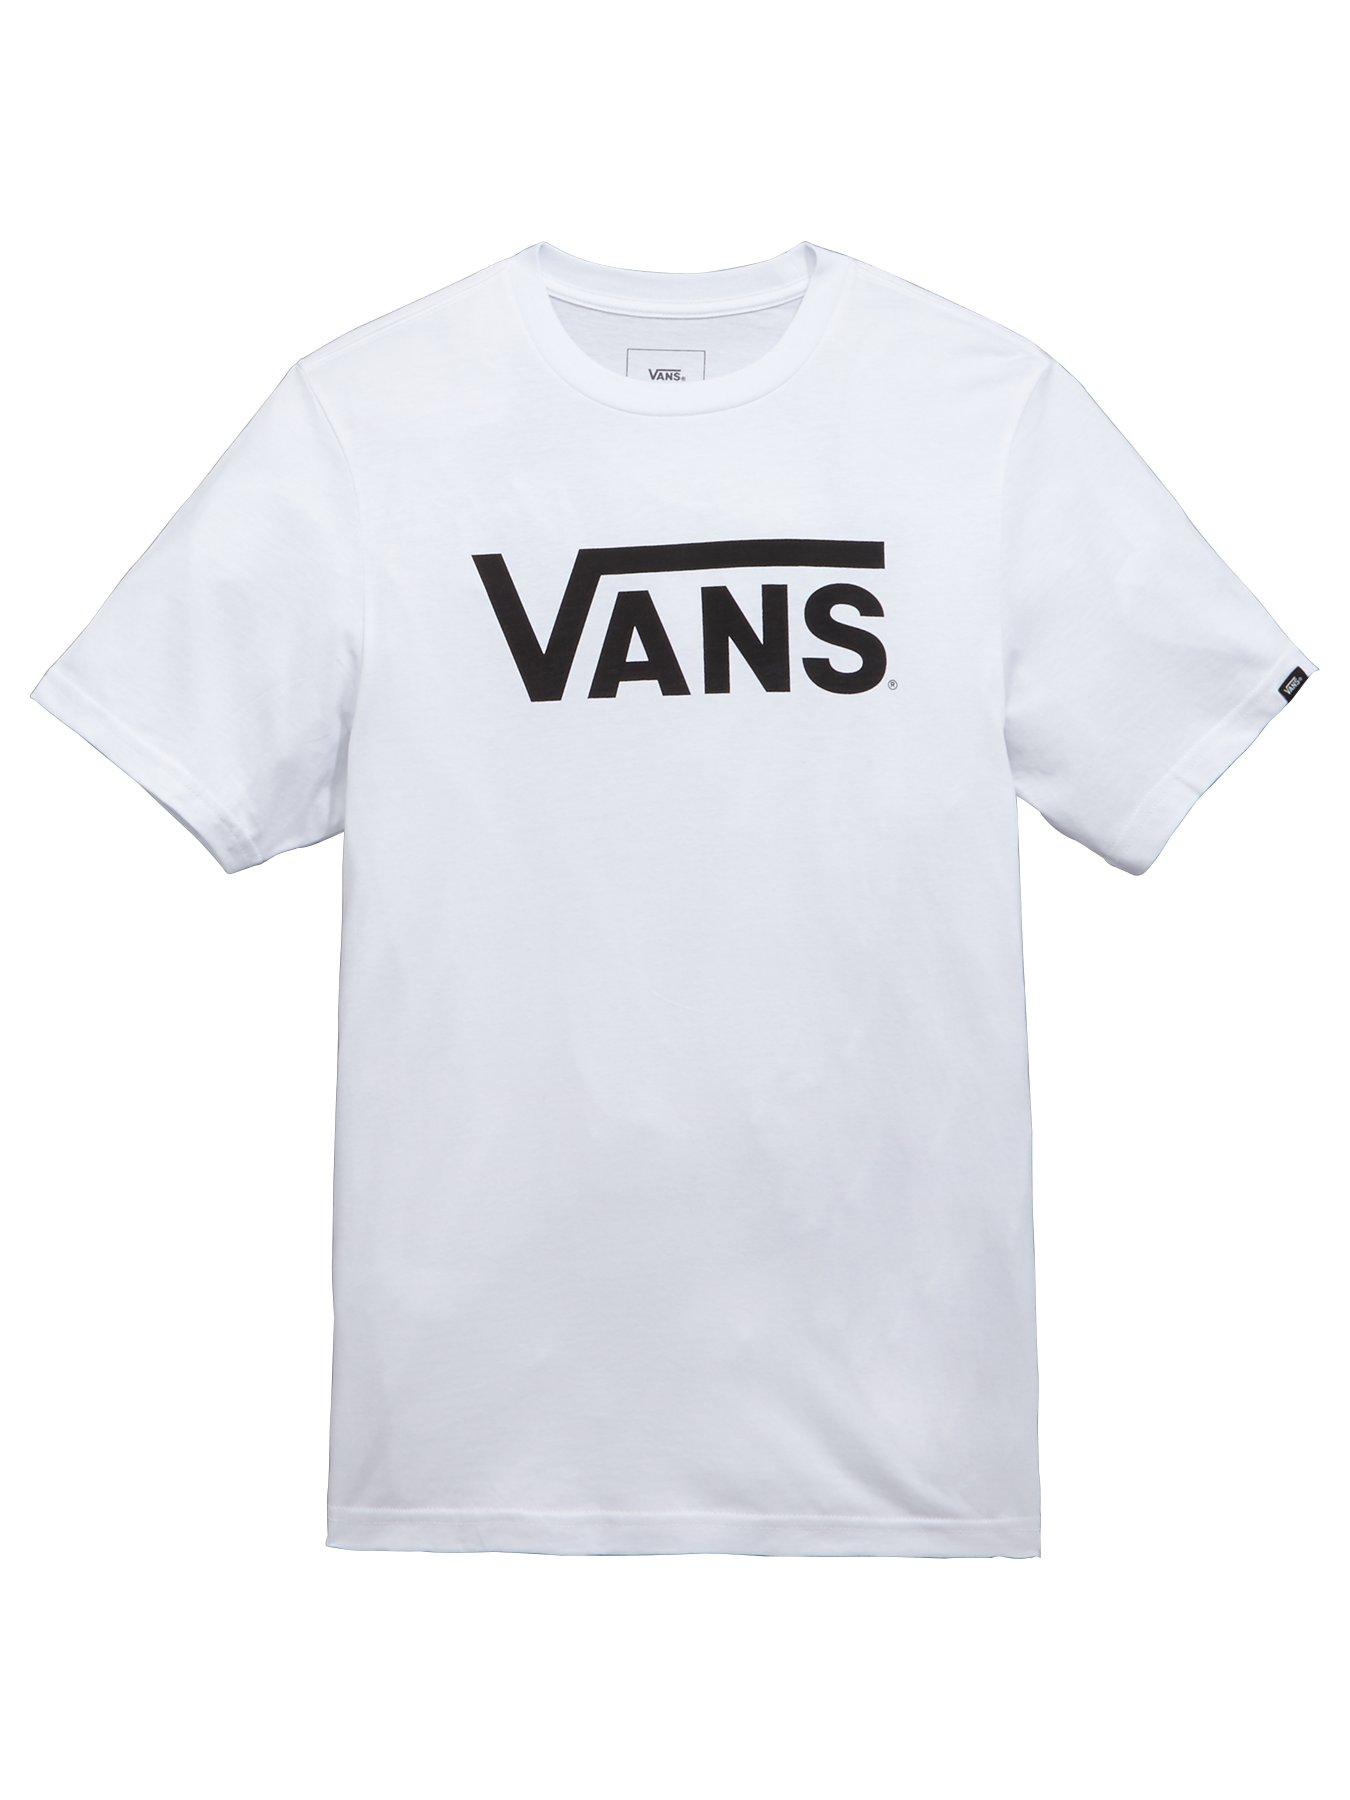 vans clothing uk